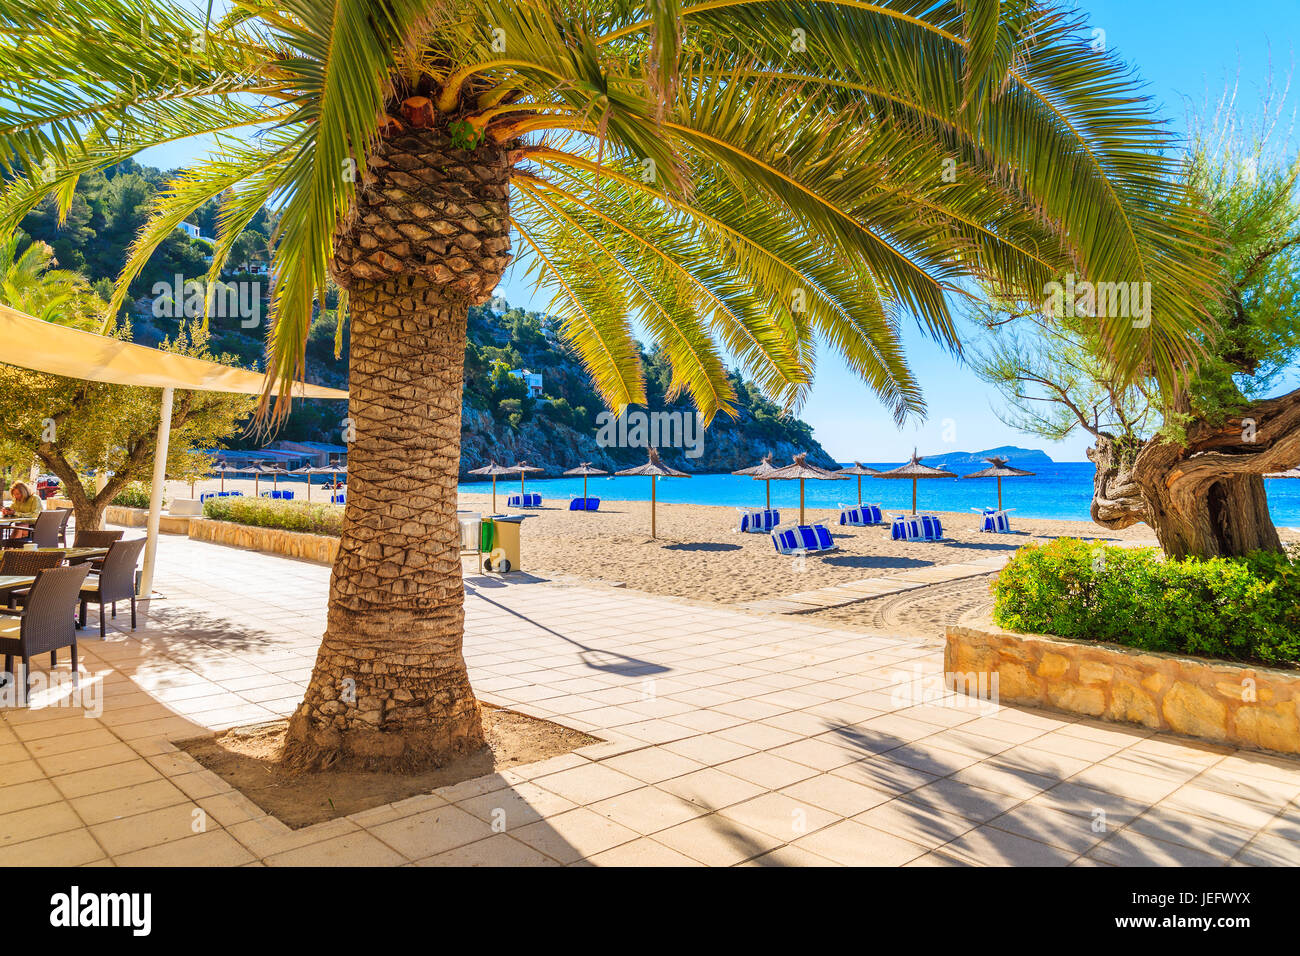 CALA SAN VICENTE BAY, IBIZA ISLAND - MAY 19, 2017: view of beach from coastal promenade with palm trees in Cala San Vicente bay, Ibiza island, Spain. Stock Photo